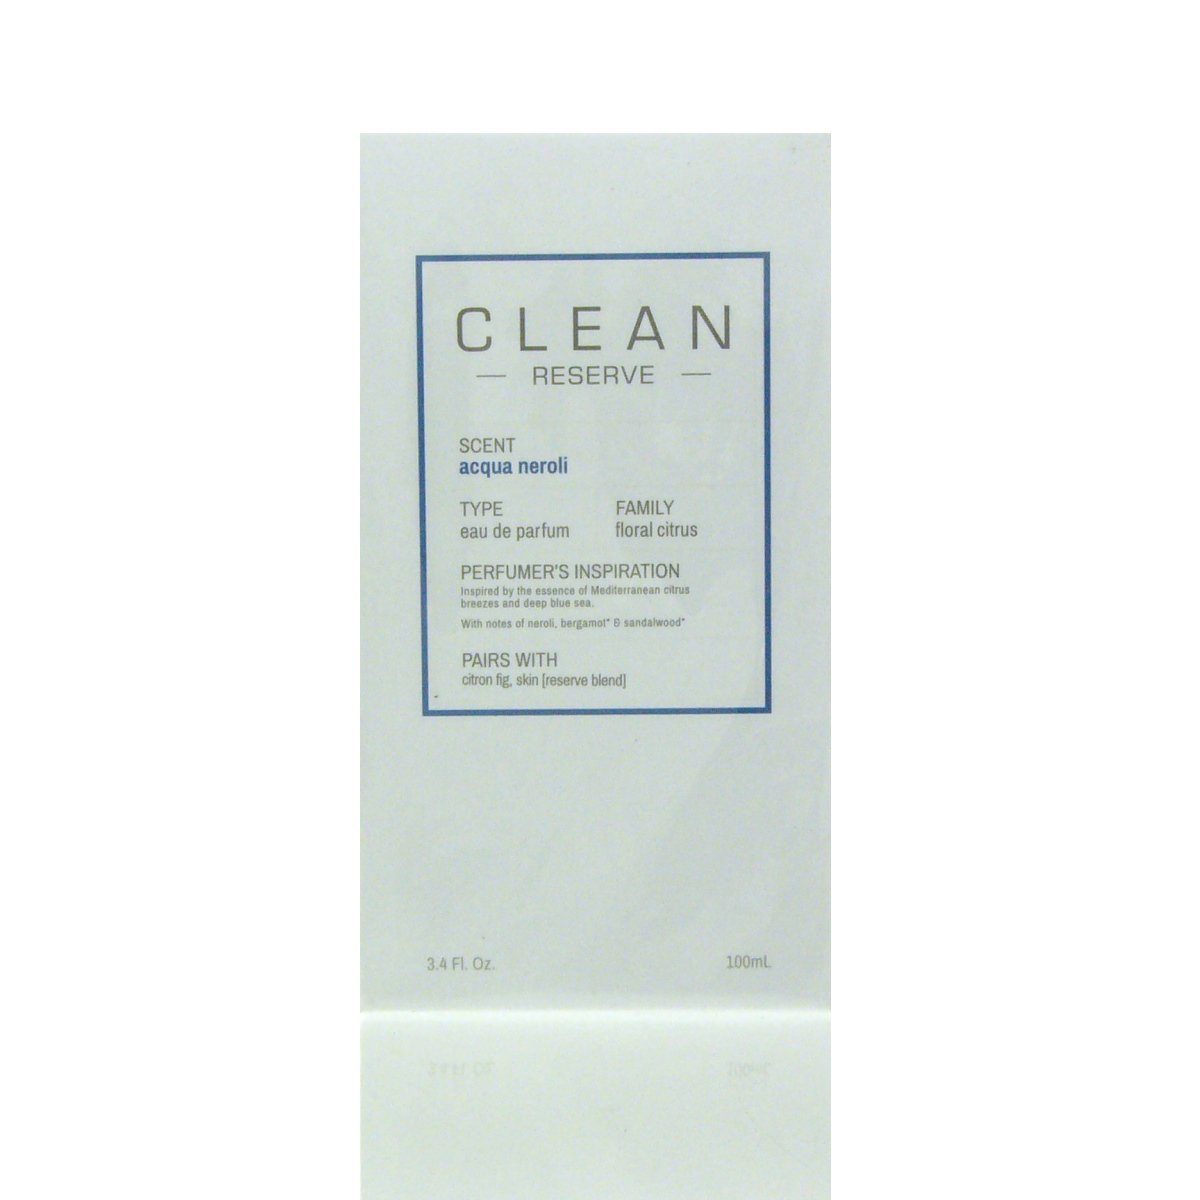 Clean Парфюми CLEAN Reserve Acqua Neroli Парфюми 100 ml